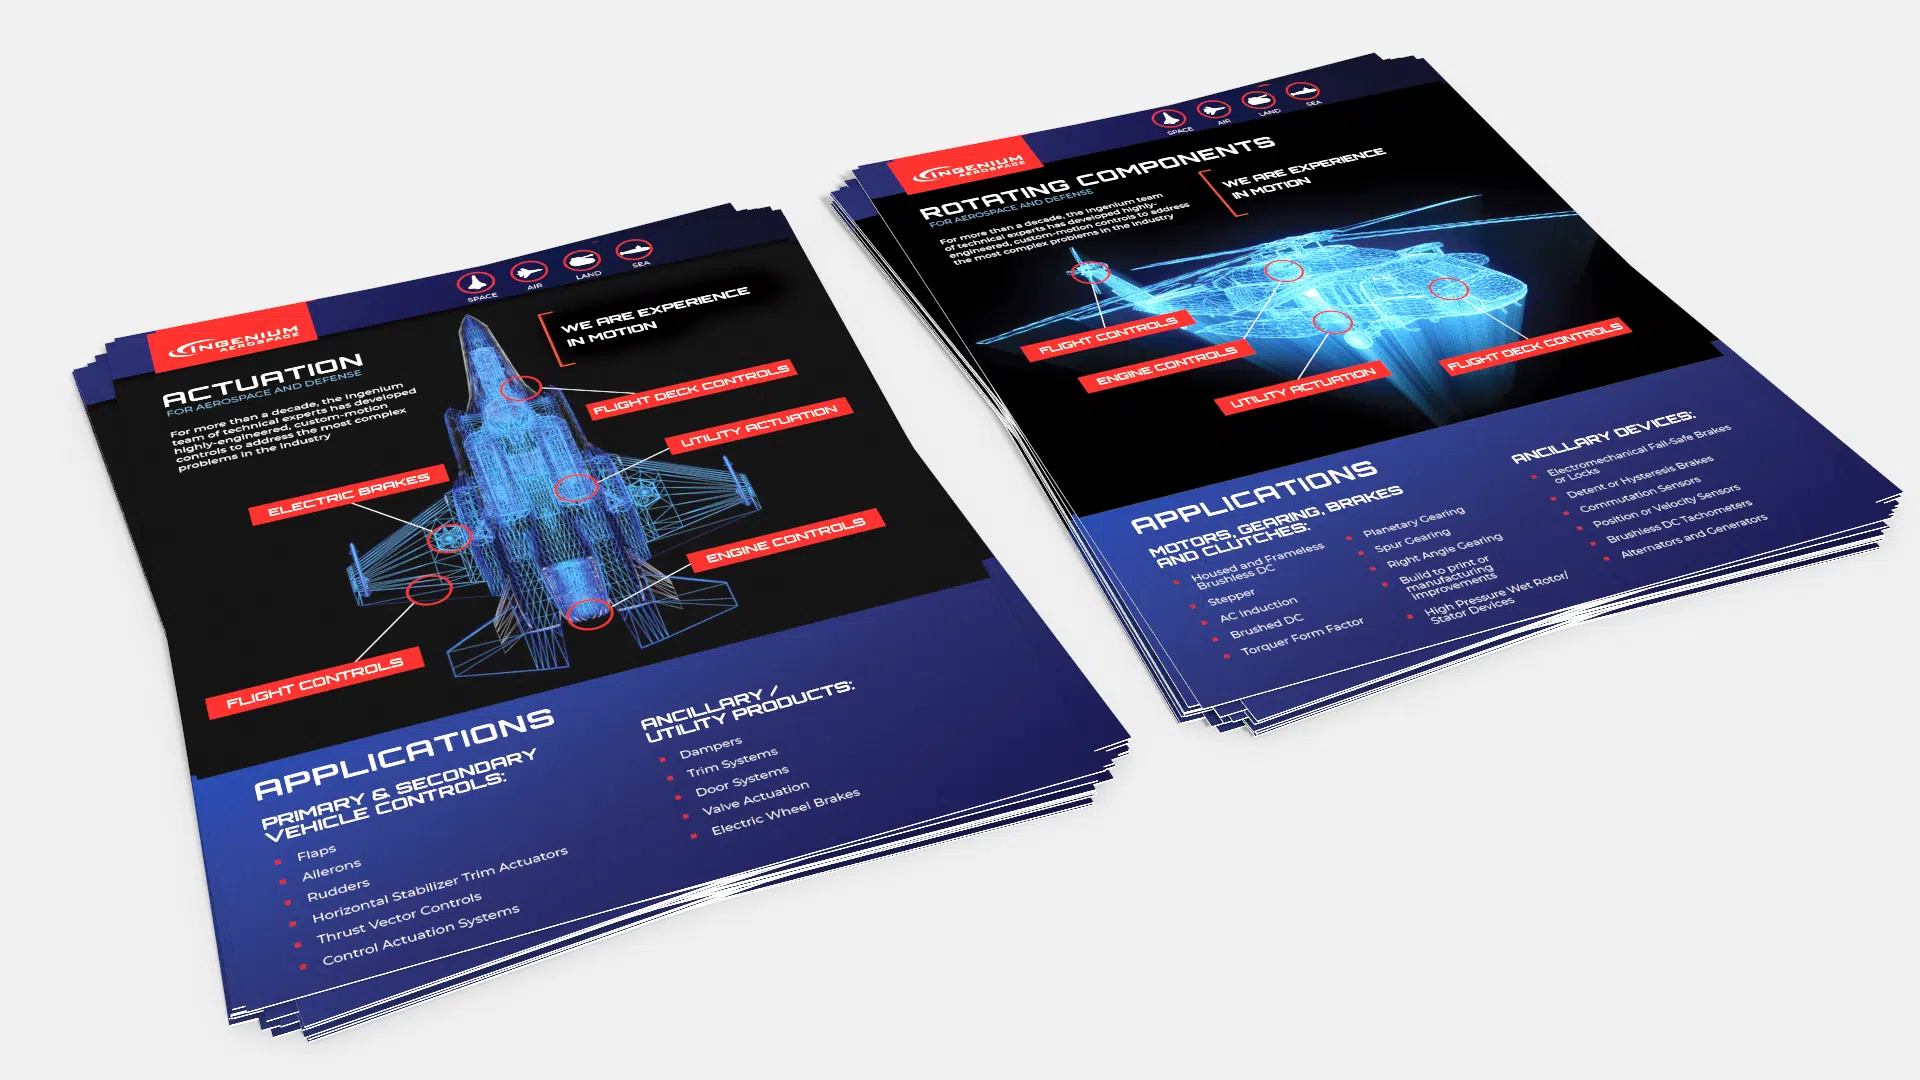 2 Stacks of brochures from Ingenium Aerospace